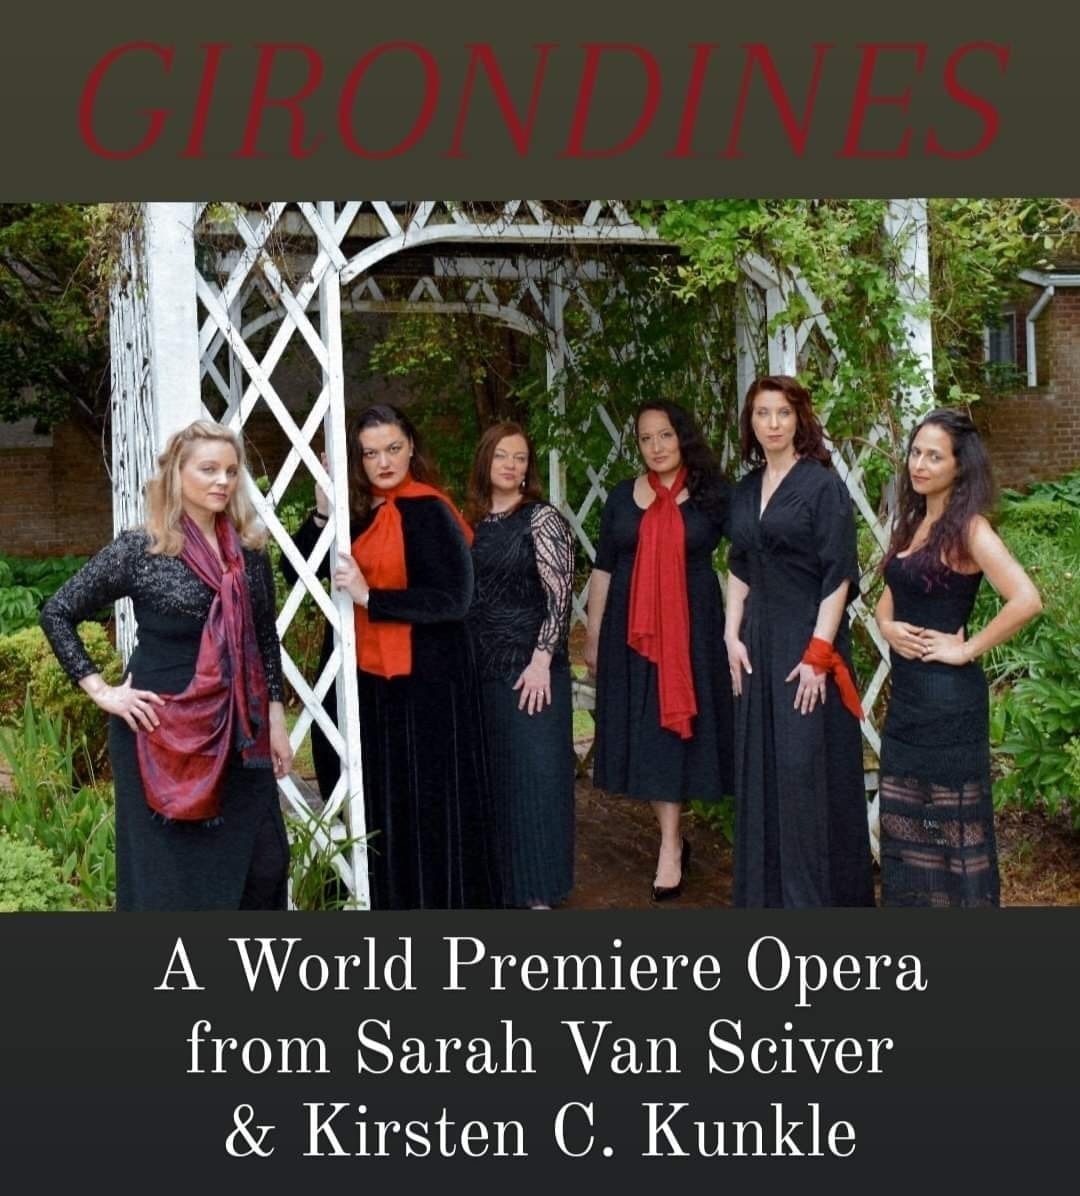 GIRONDINES opera premiere, Wilmington, Delaware, United States